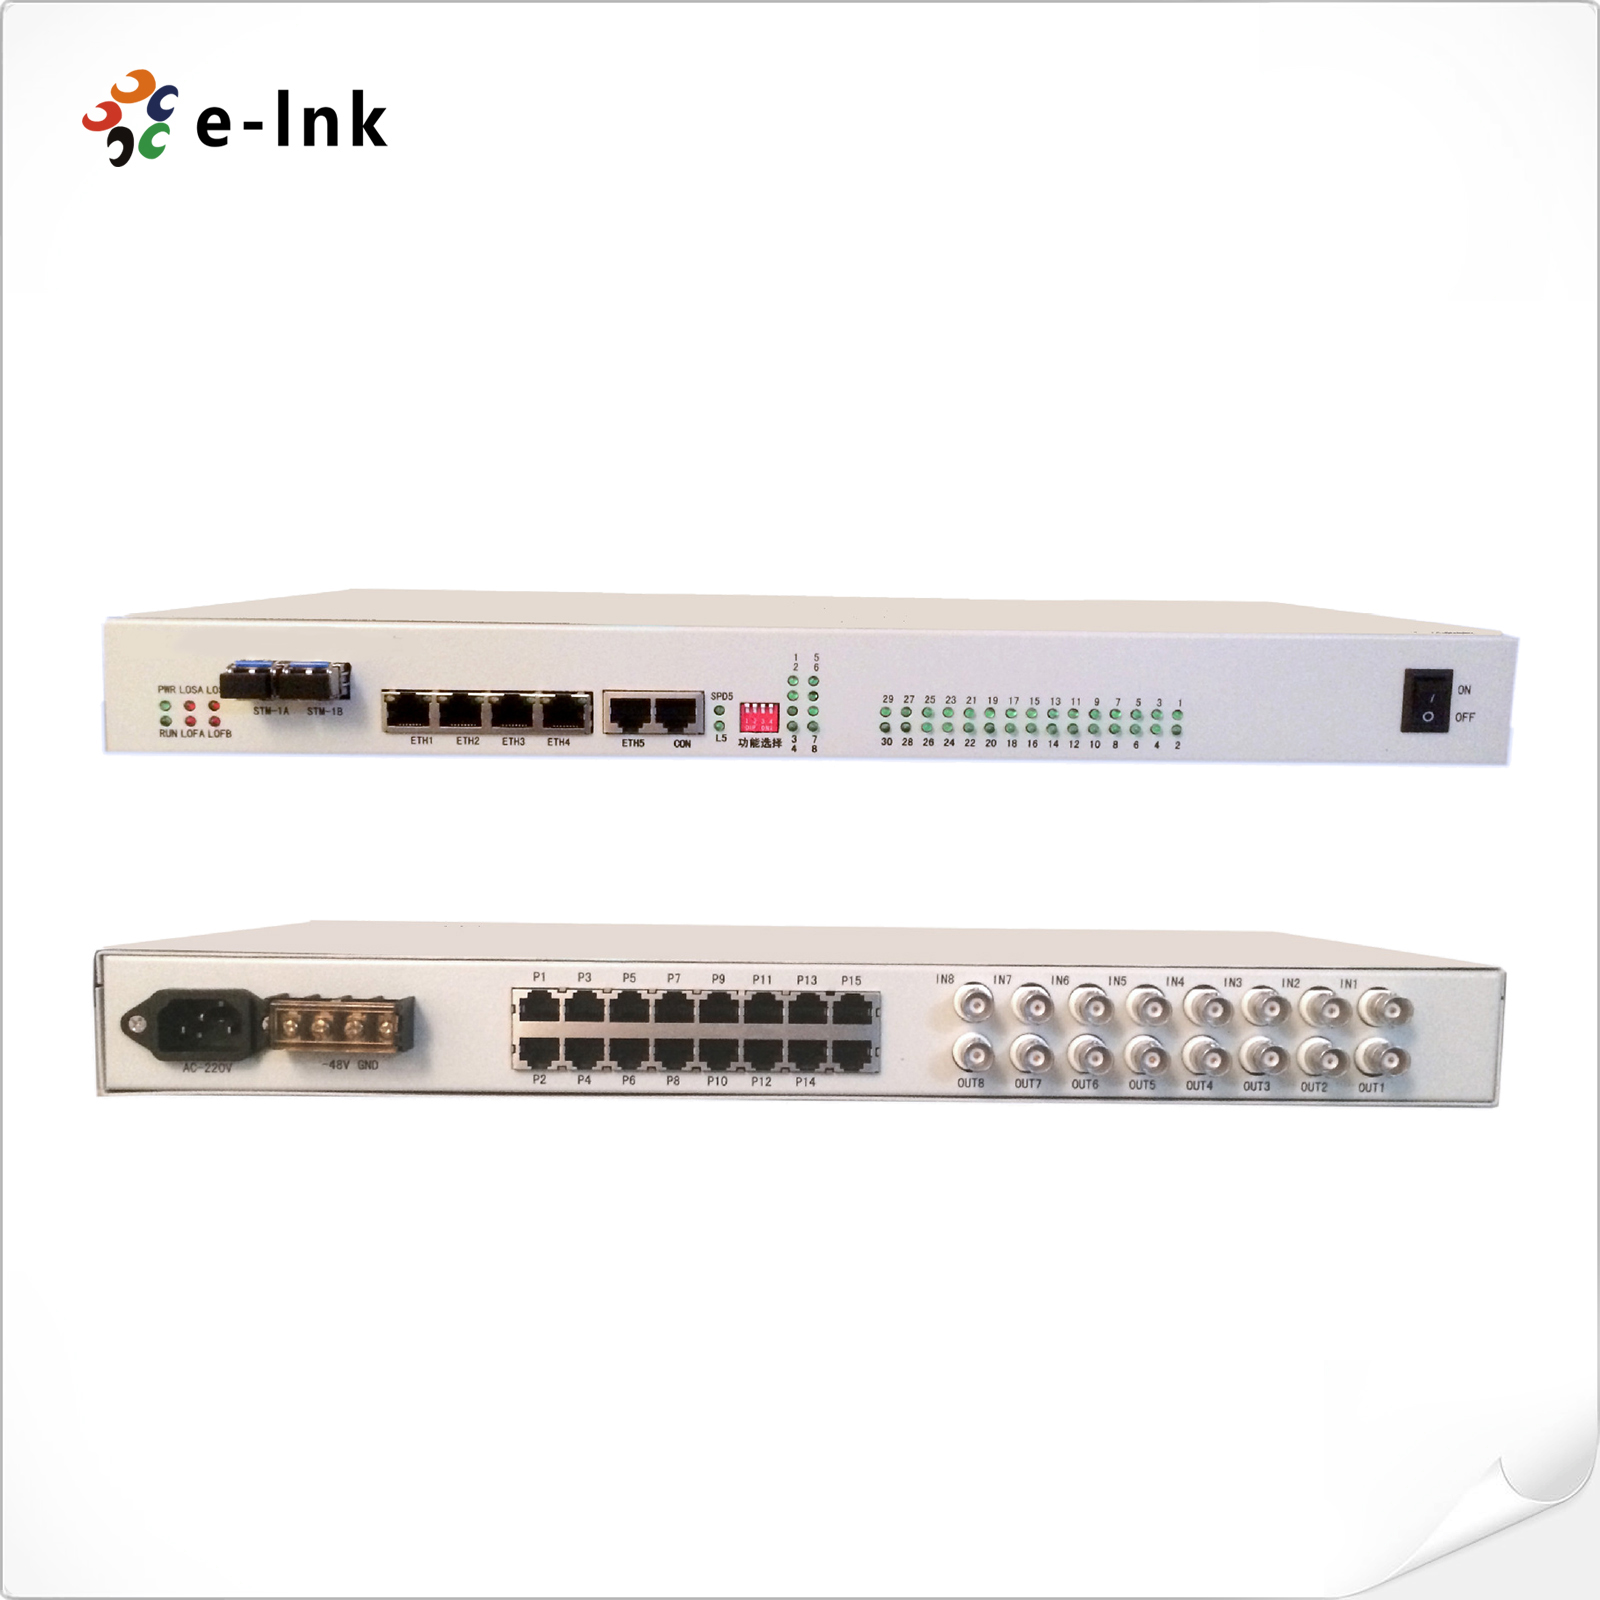 30 x FXO/FXS Ports + 4 x E1 Ports + 4 x Fast Ethernet over STM-1 SDH Fiber Multiplexer